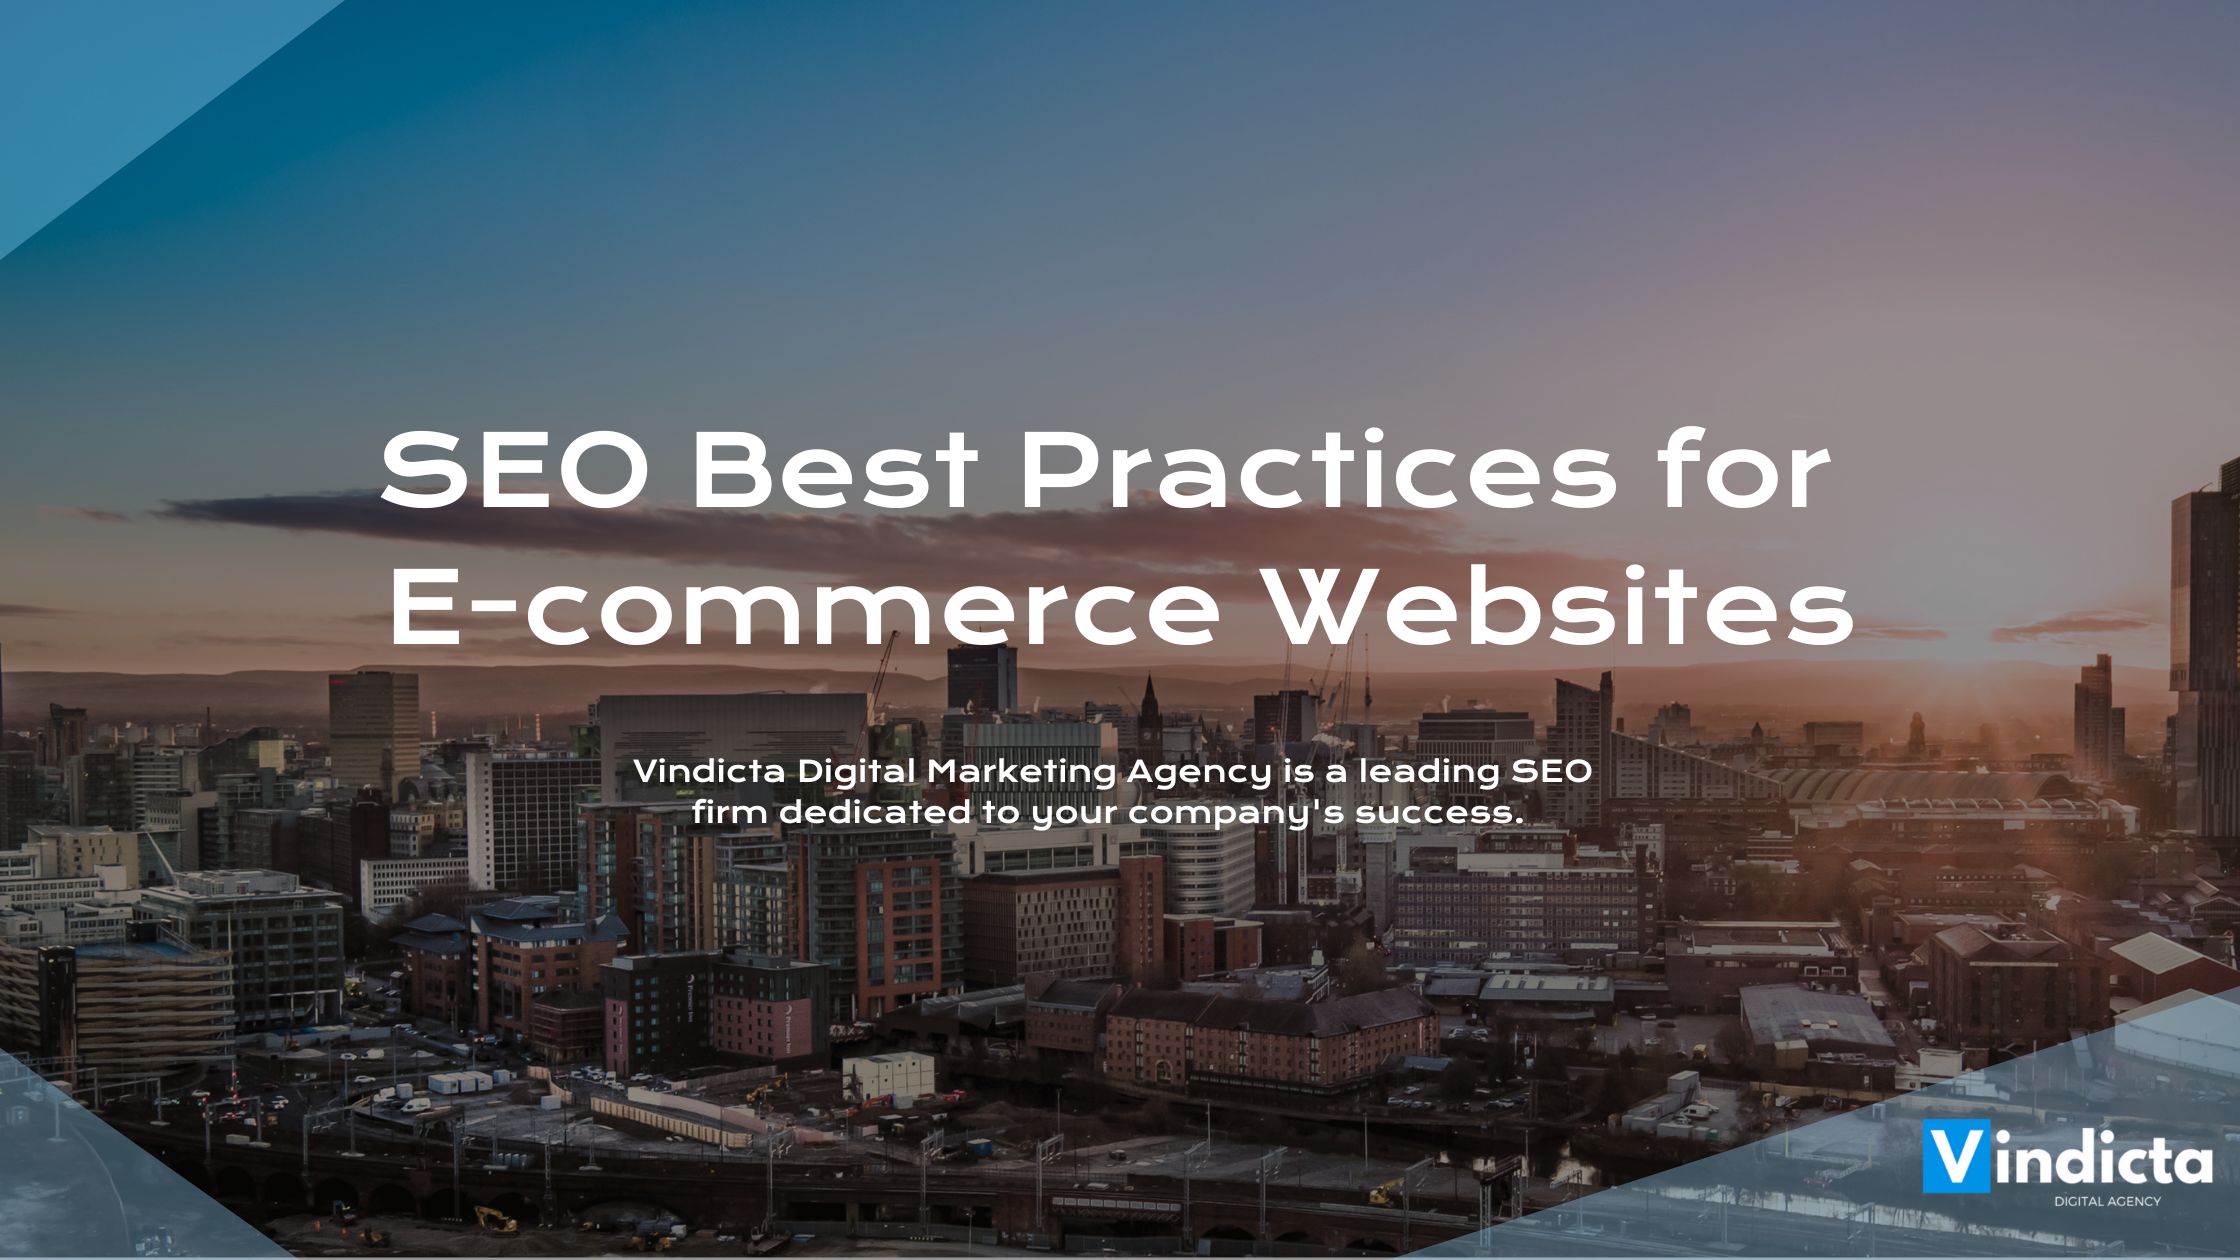 SEO Best Practices for E-commerce Websites: Manchester SEO